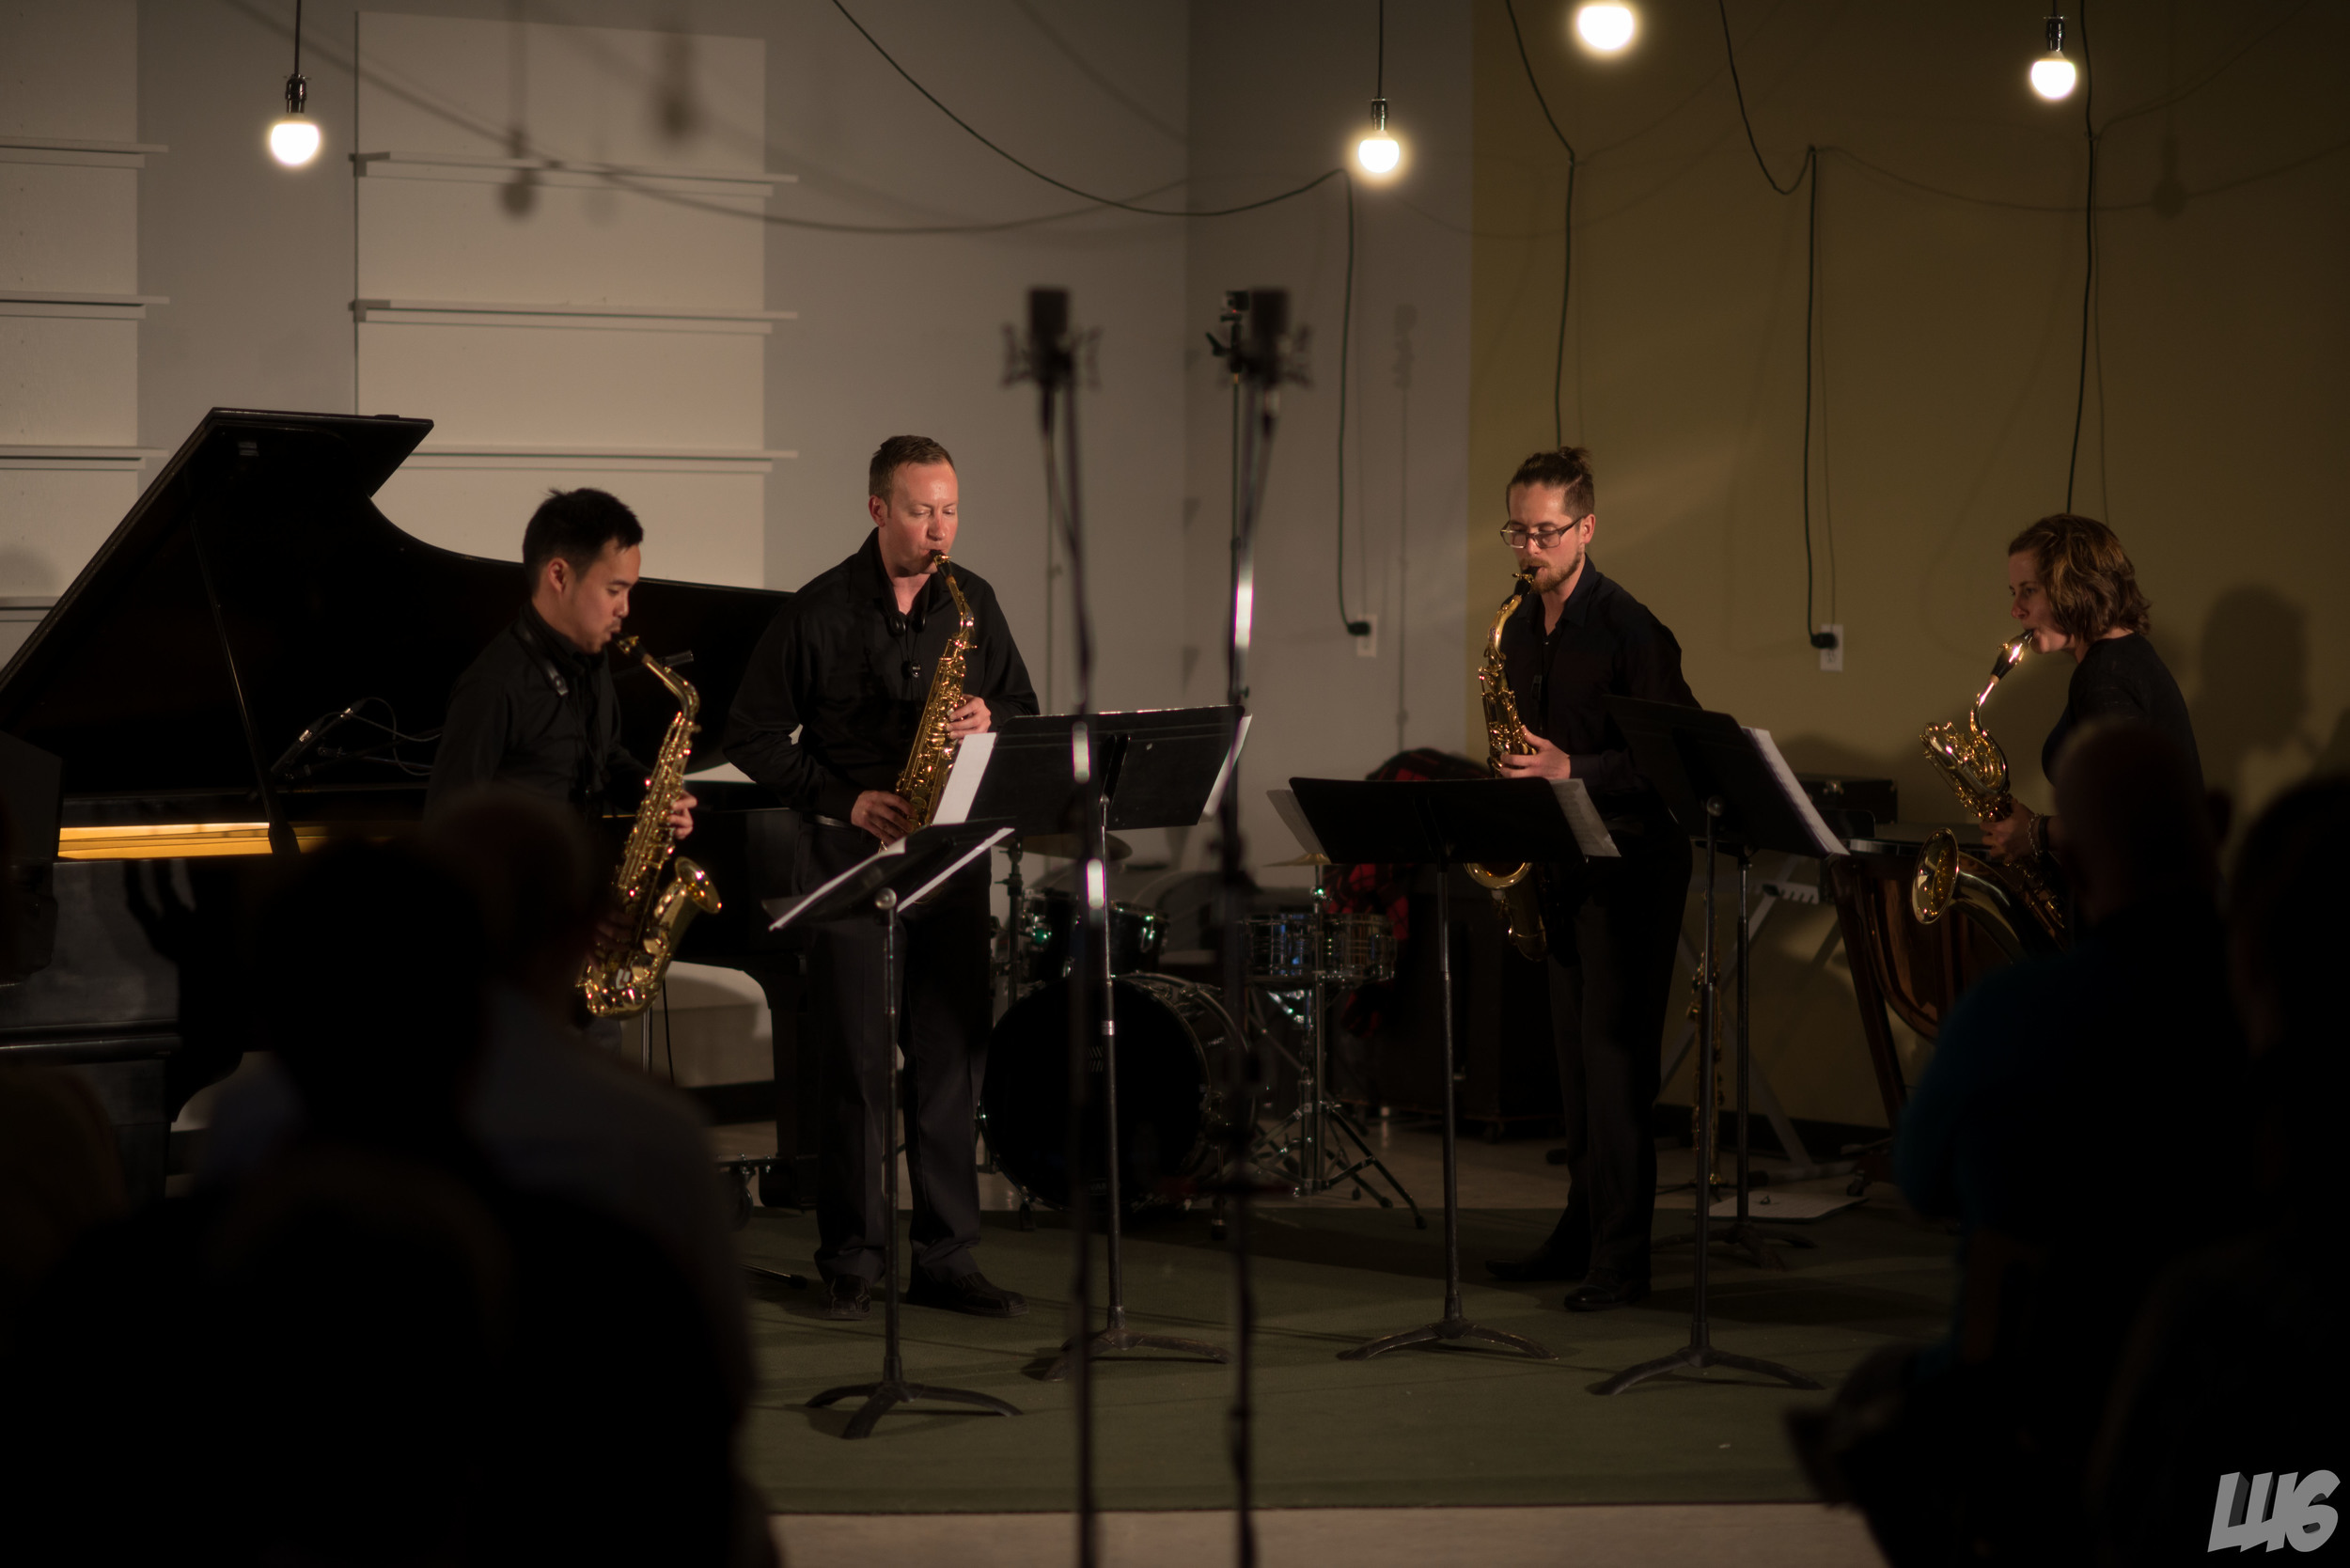  Proteus Quartet, Strata New Music Festival (2015), Saskatoon, Canada 